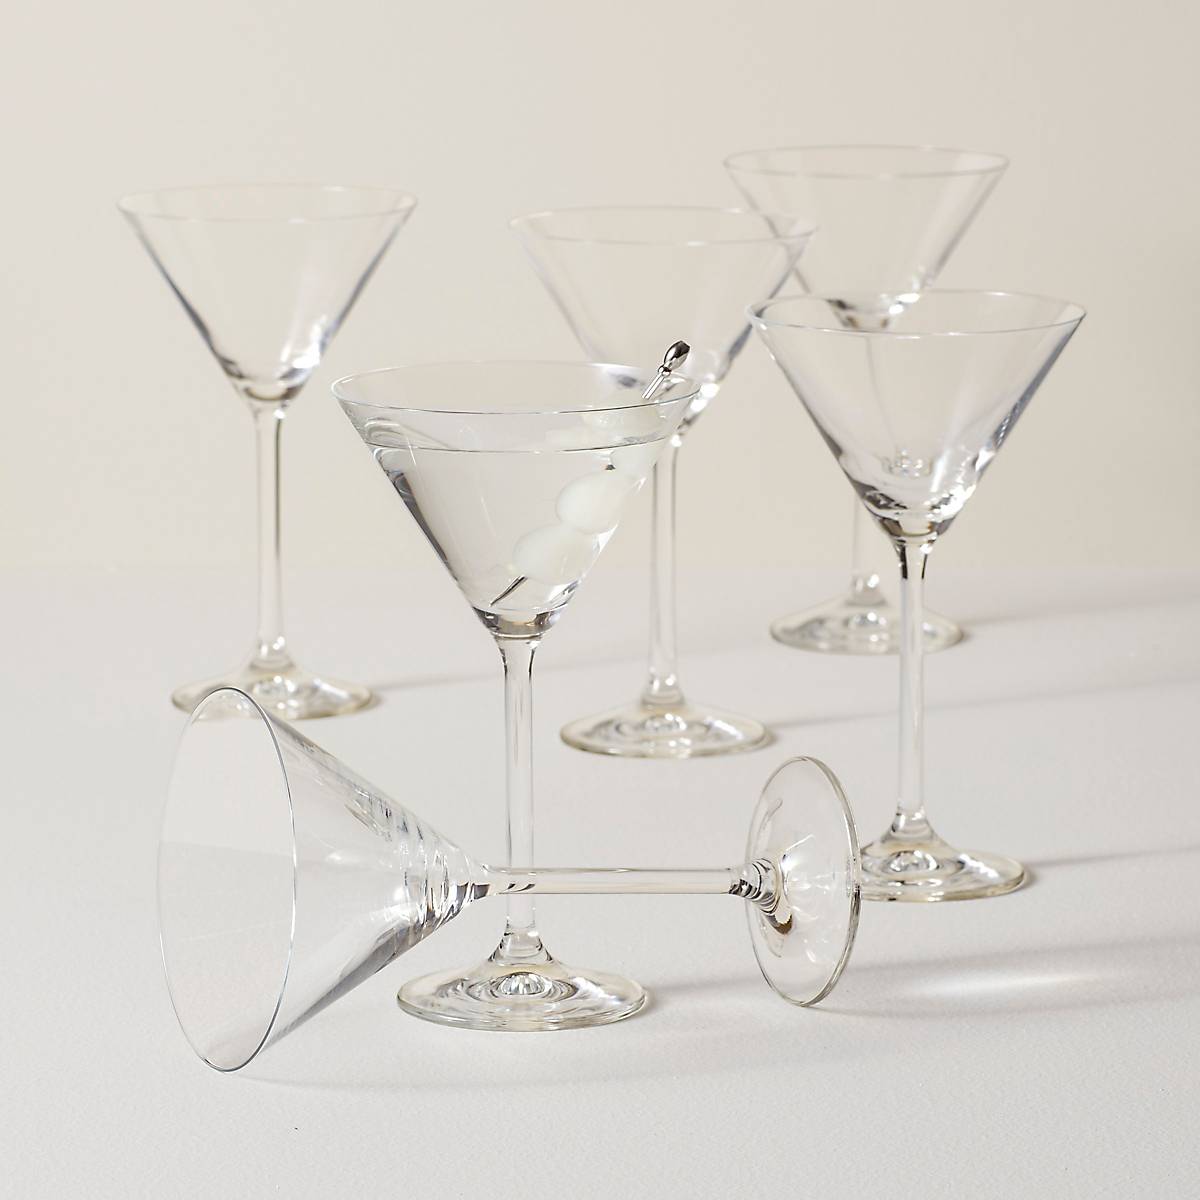 LUNA & MANTHA Unique Martini Glasses, Set of 4